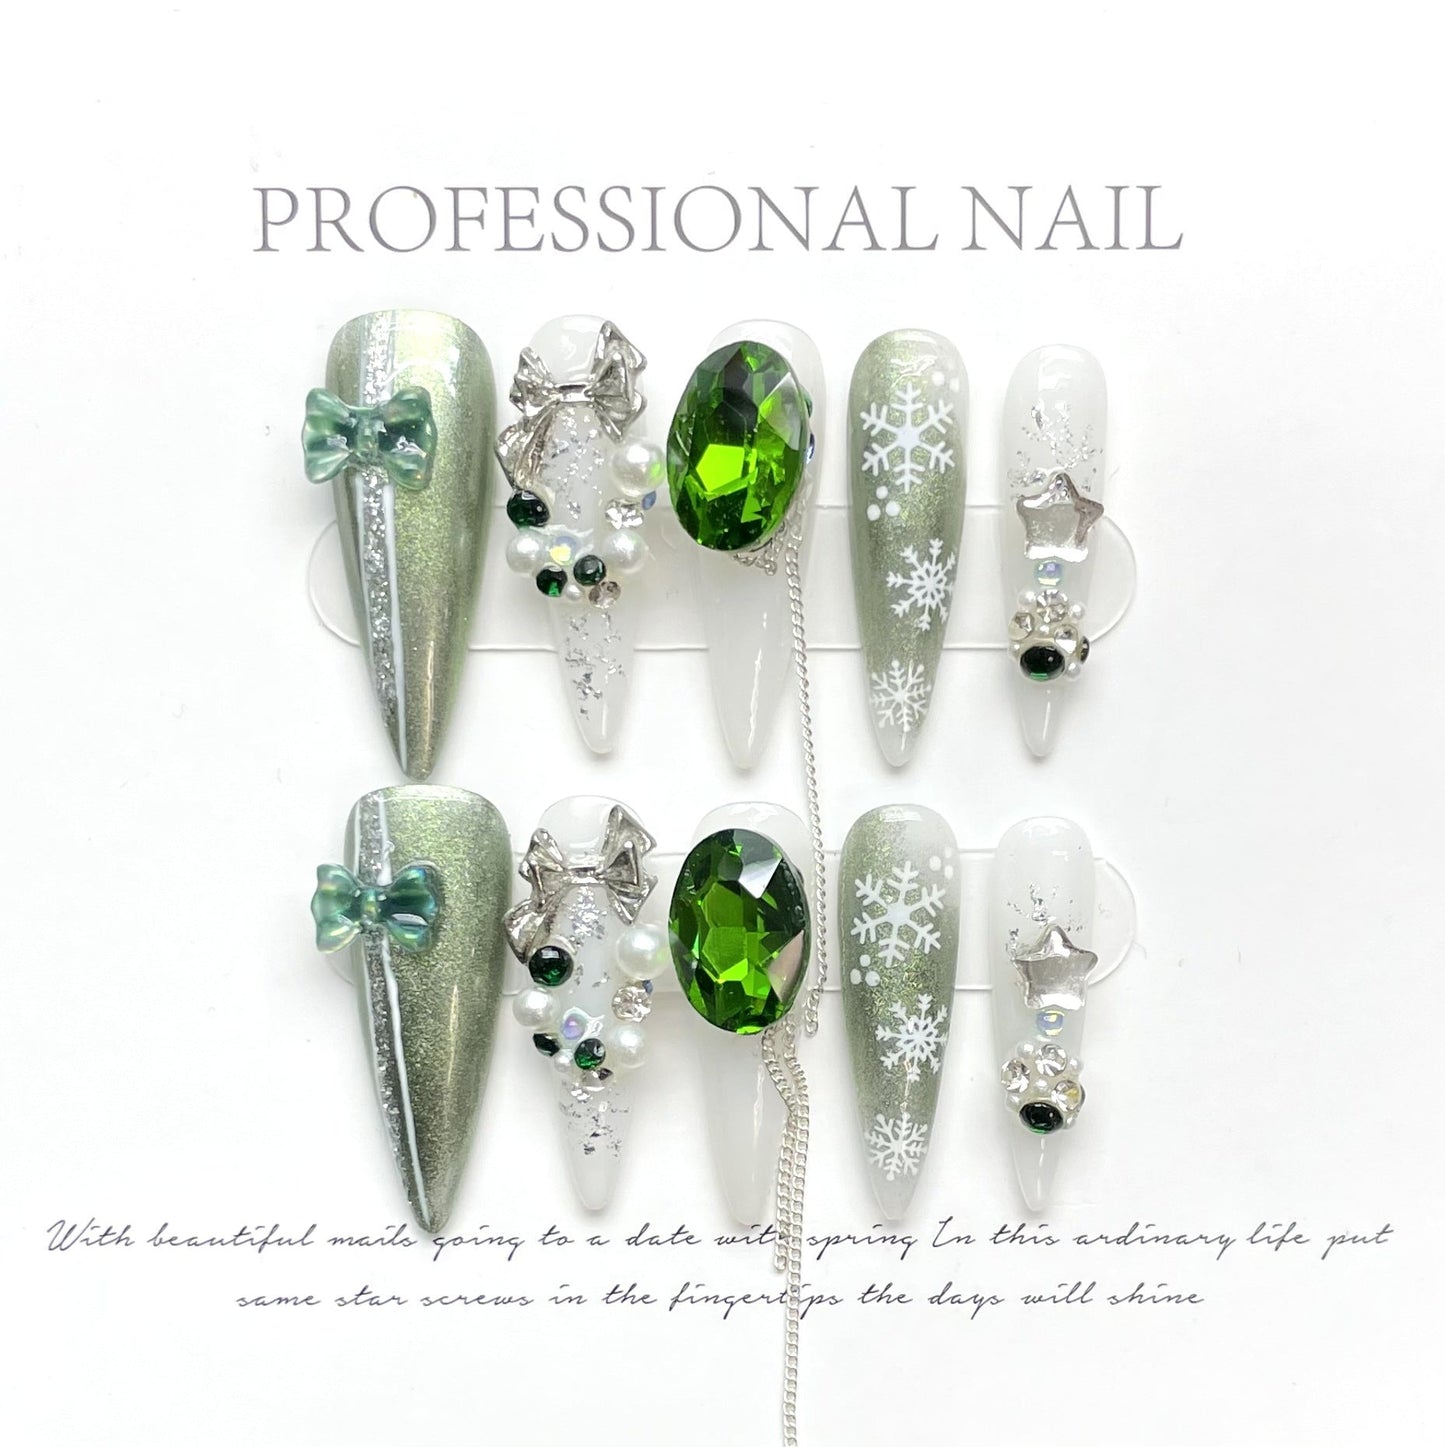 1286 Winter snowflakes style press on nails 100% handmade false nails green white